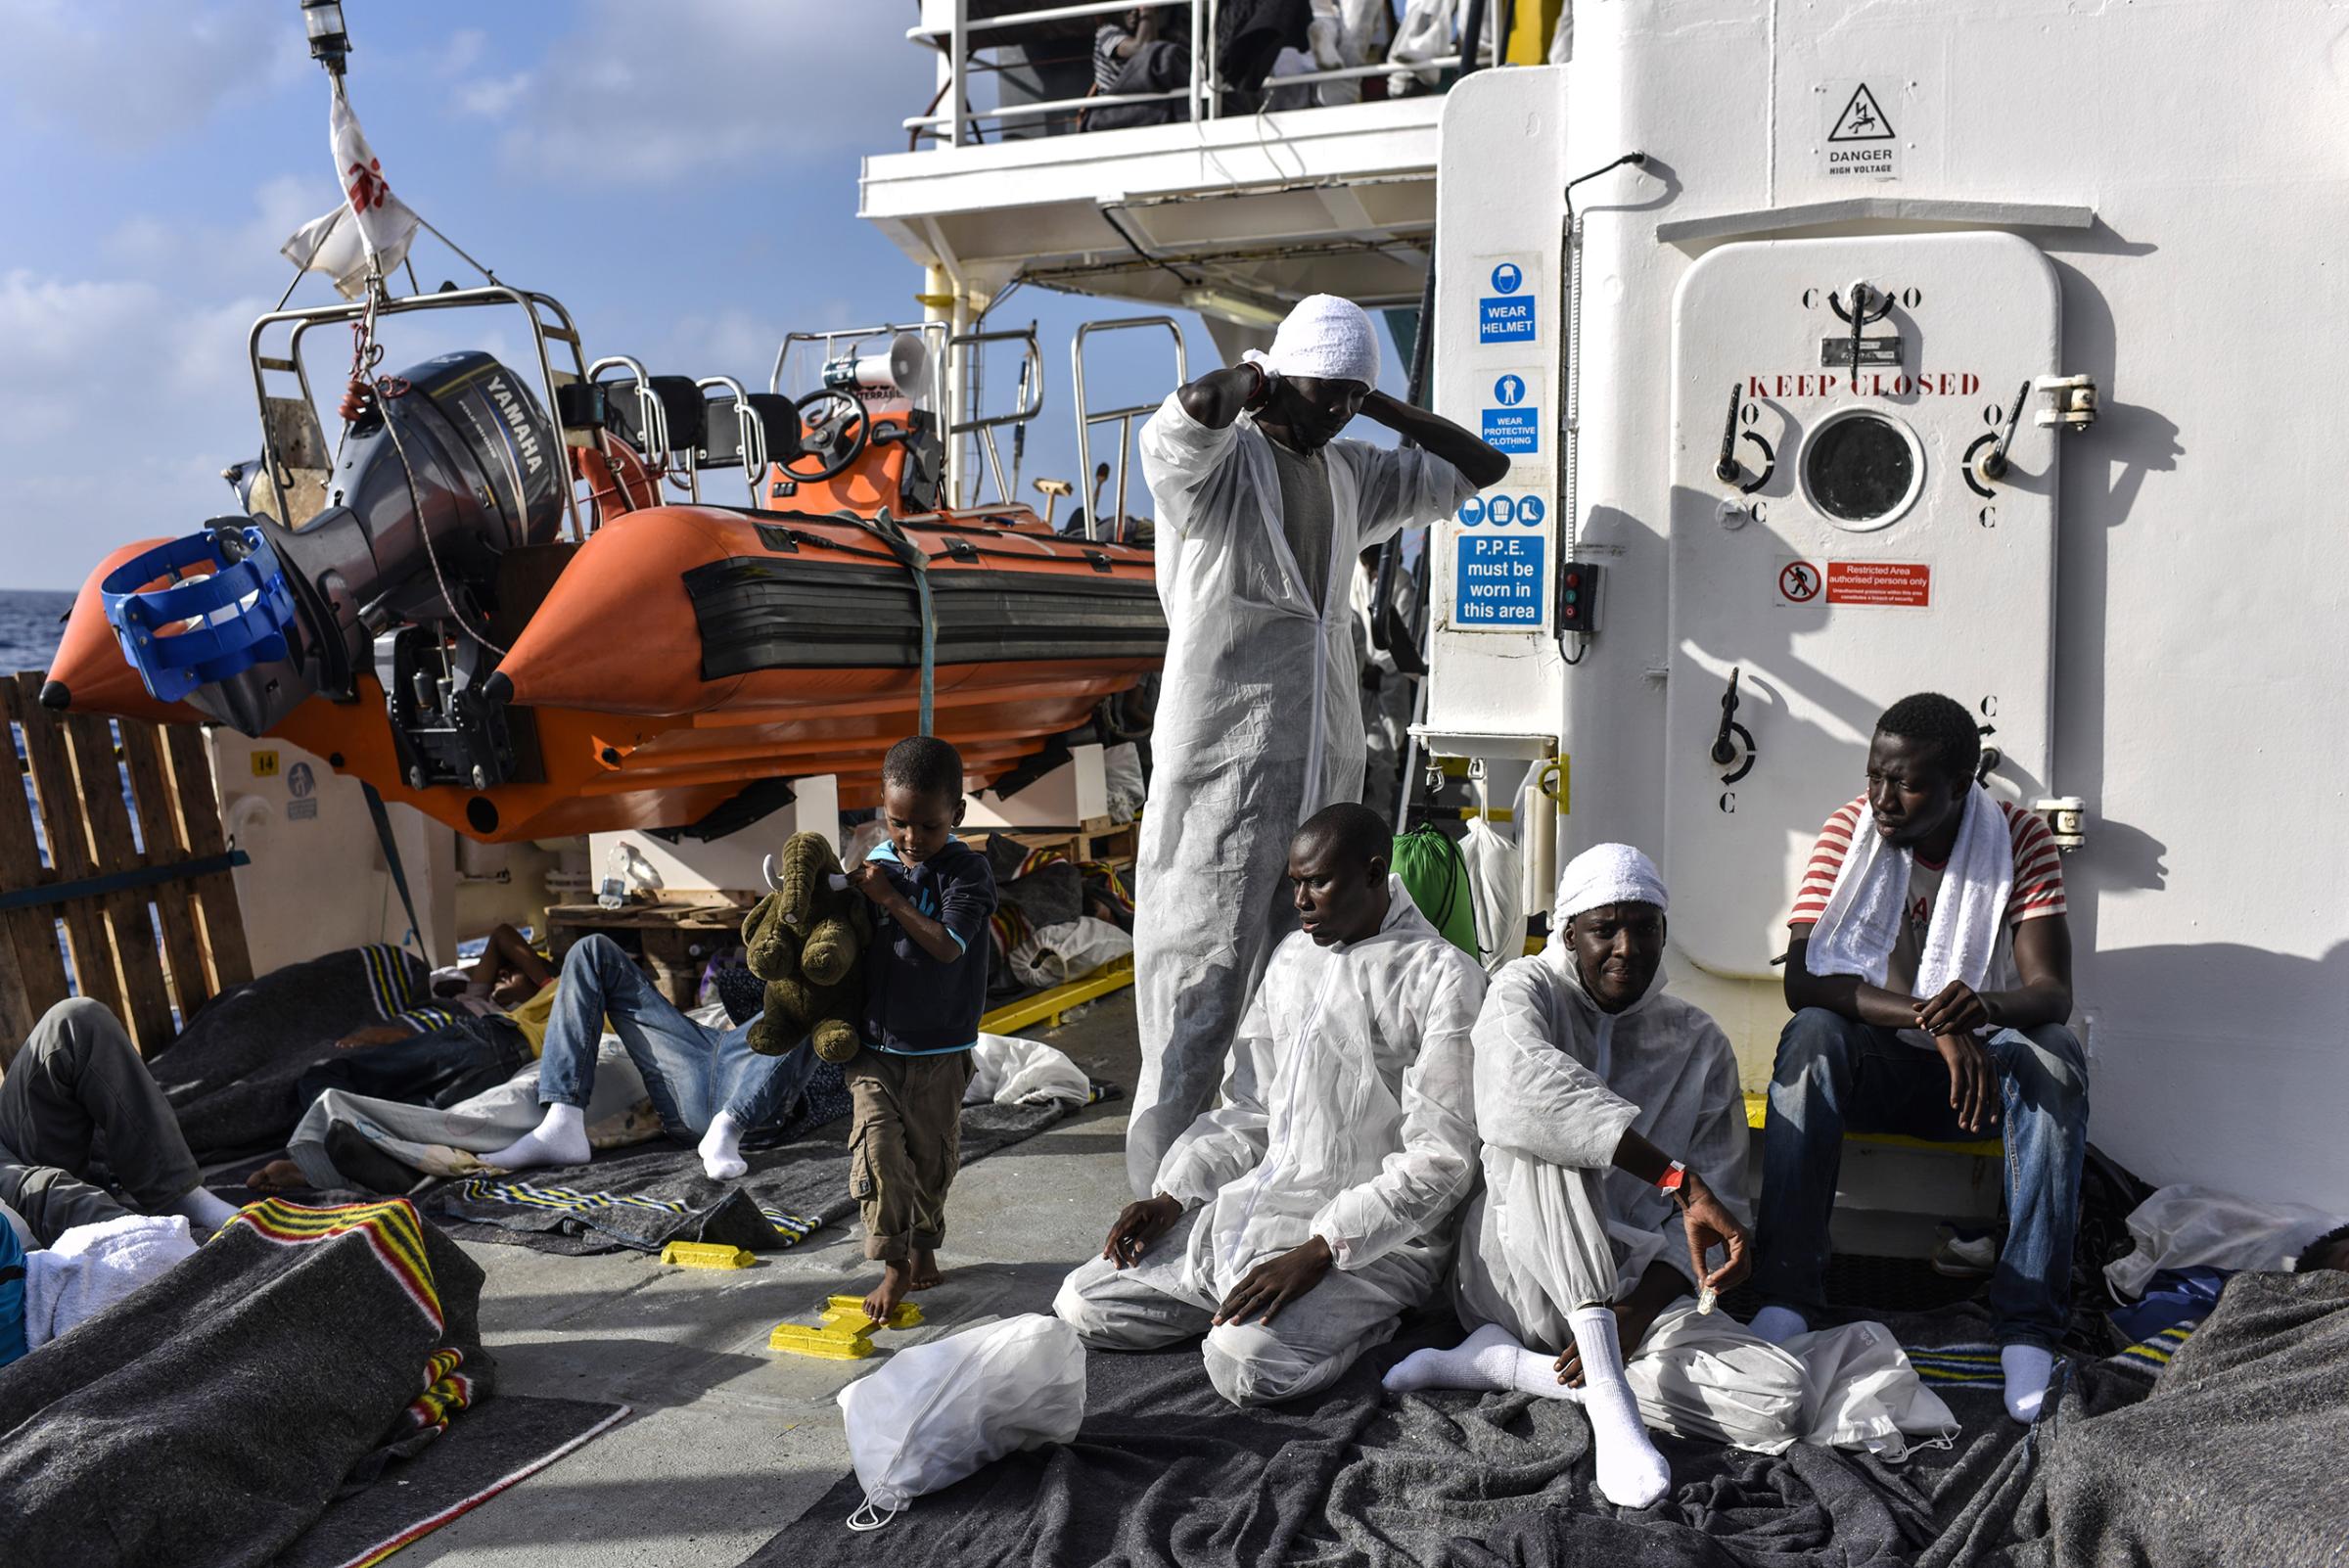 Muslim migrants preparing for prayer on the deck of the MV Aquarius ship, Aug. 22, 2016.